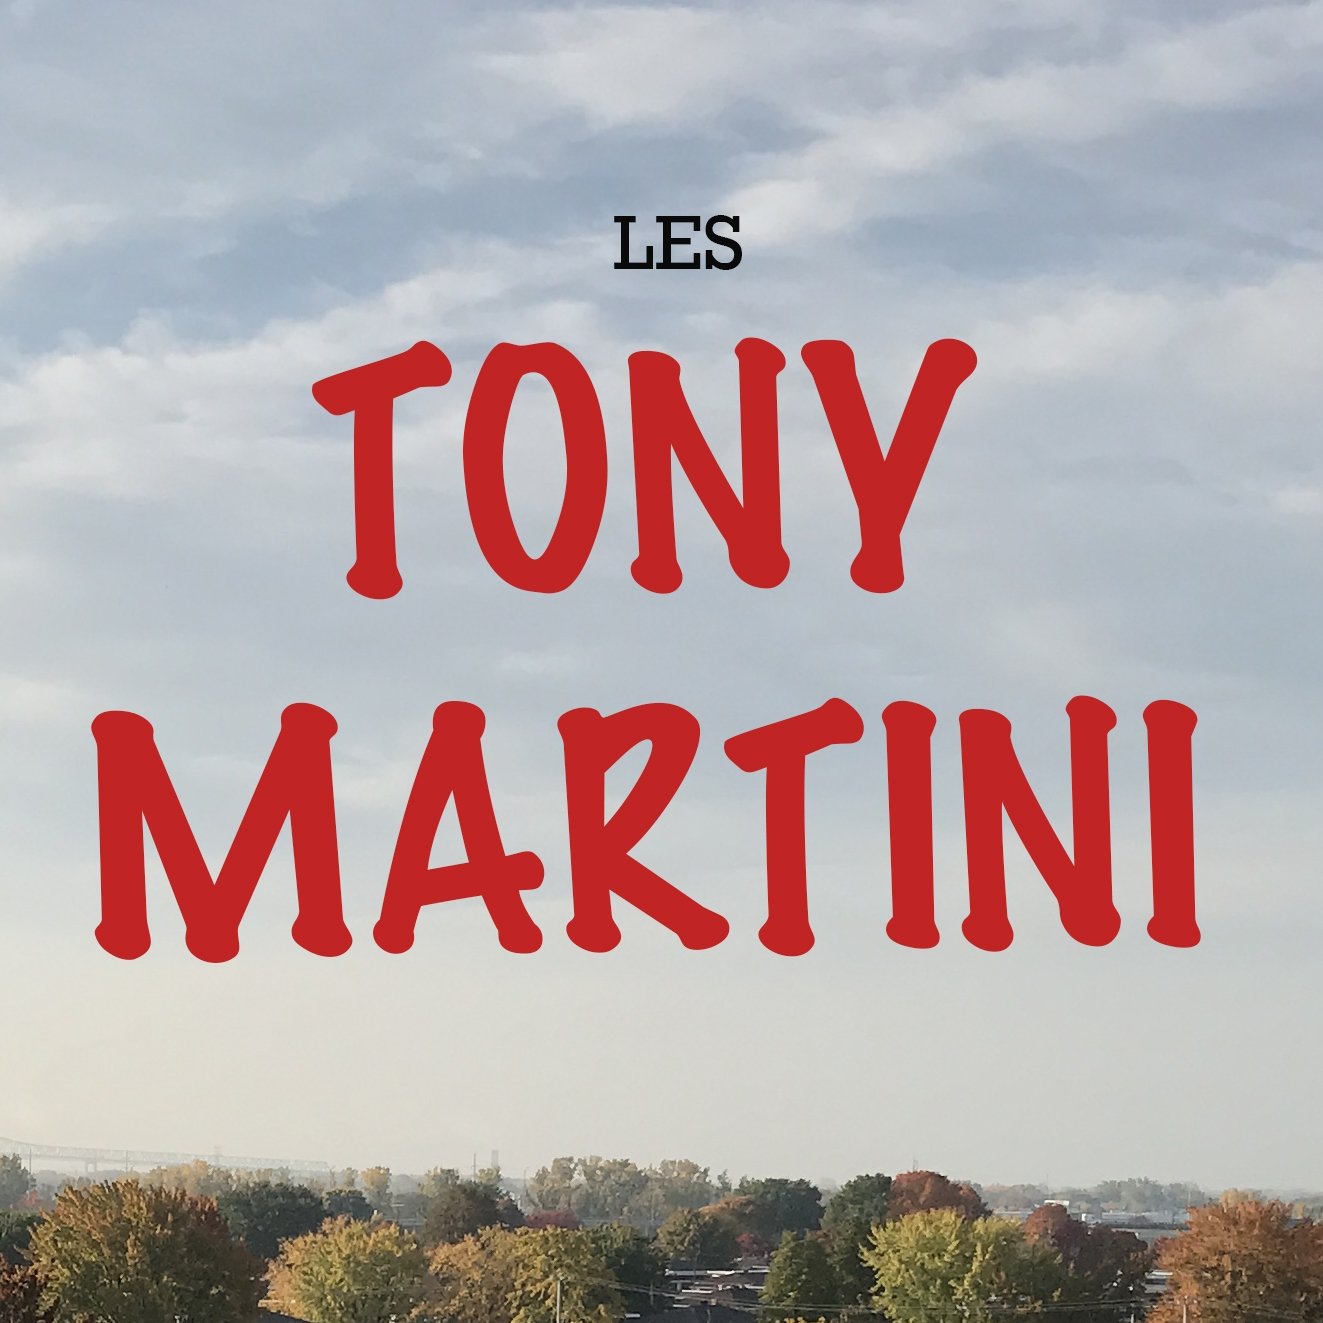 Les Tony Martini picture